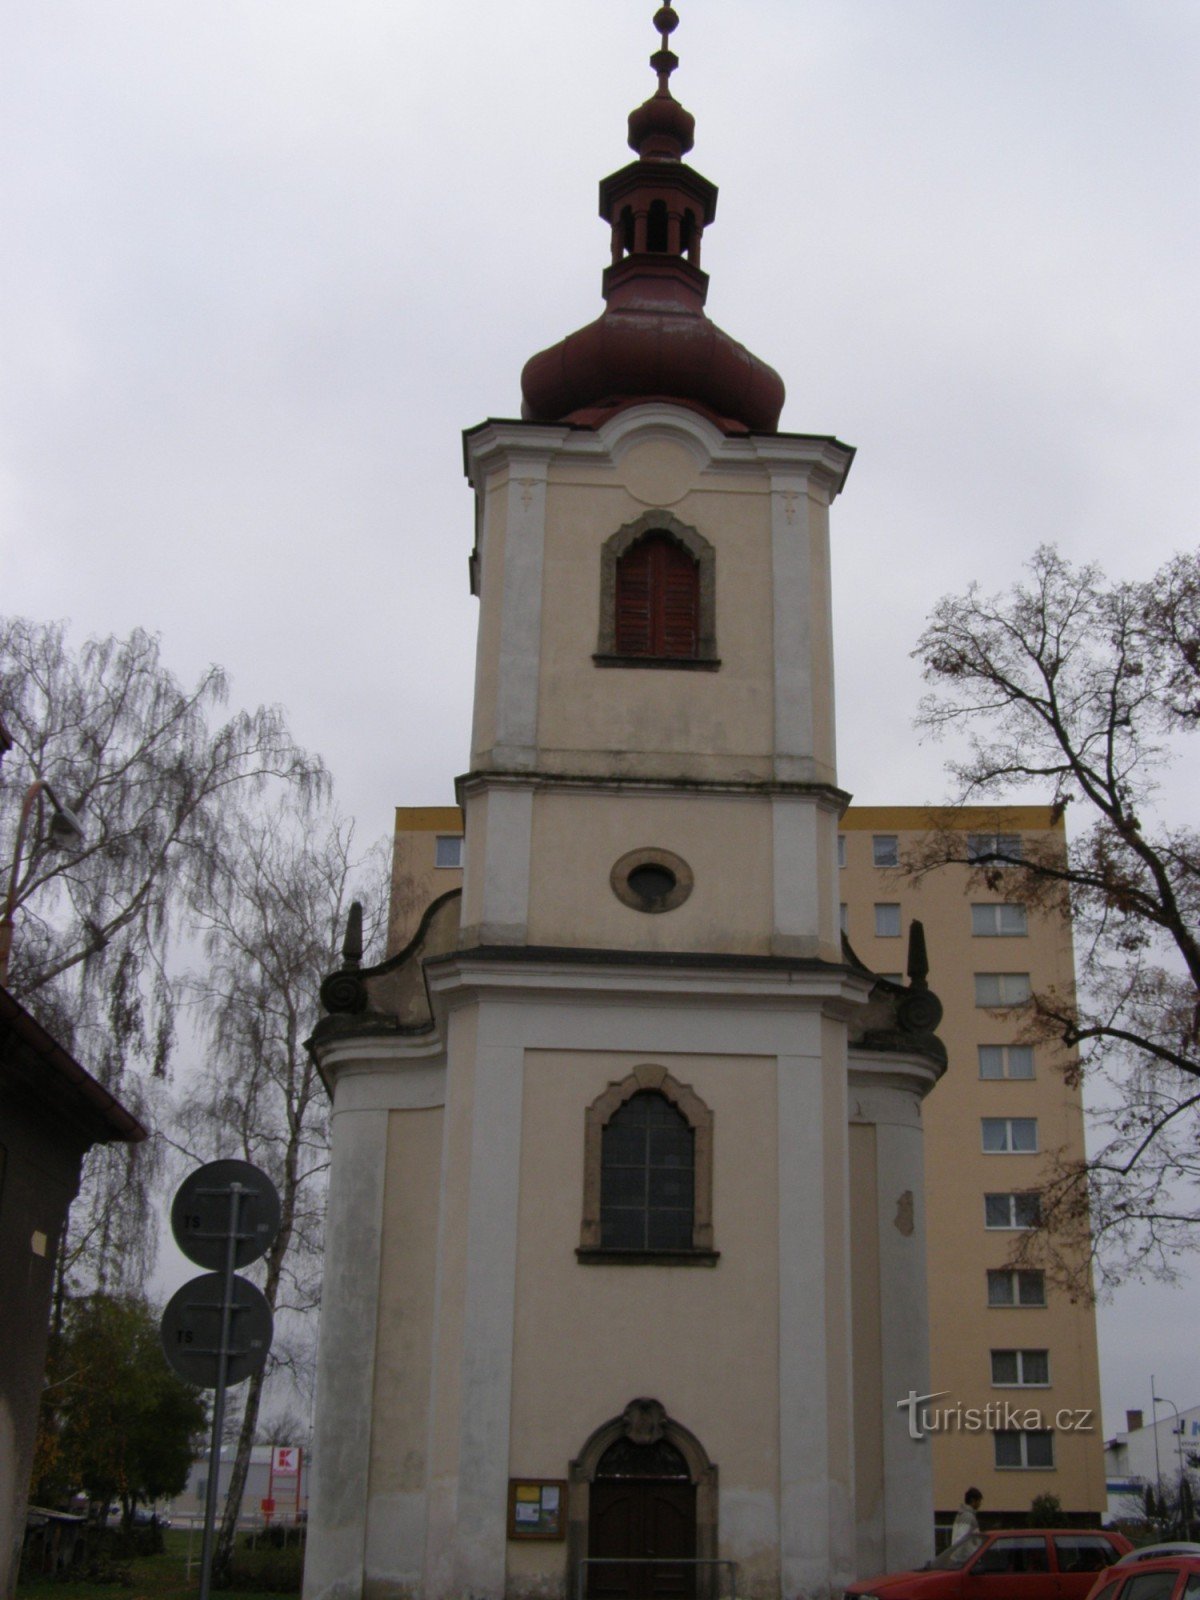 Dvur Králové - Kirche der Erhöhung des hl. Krise